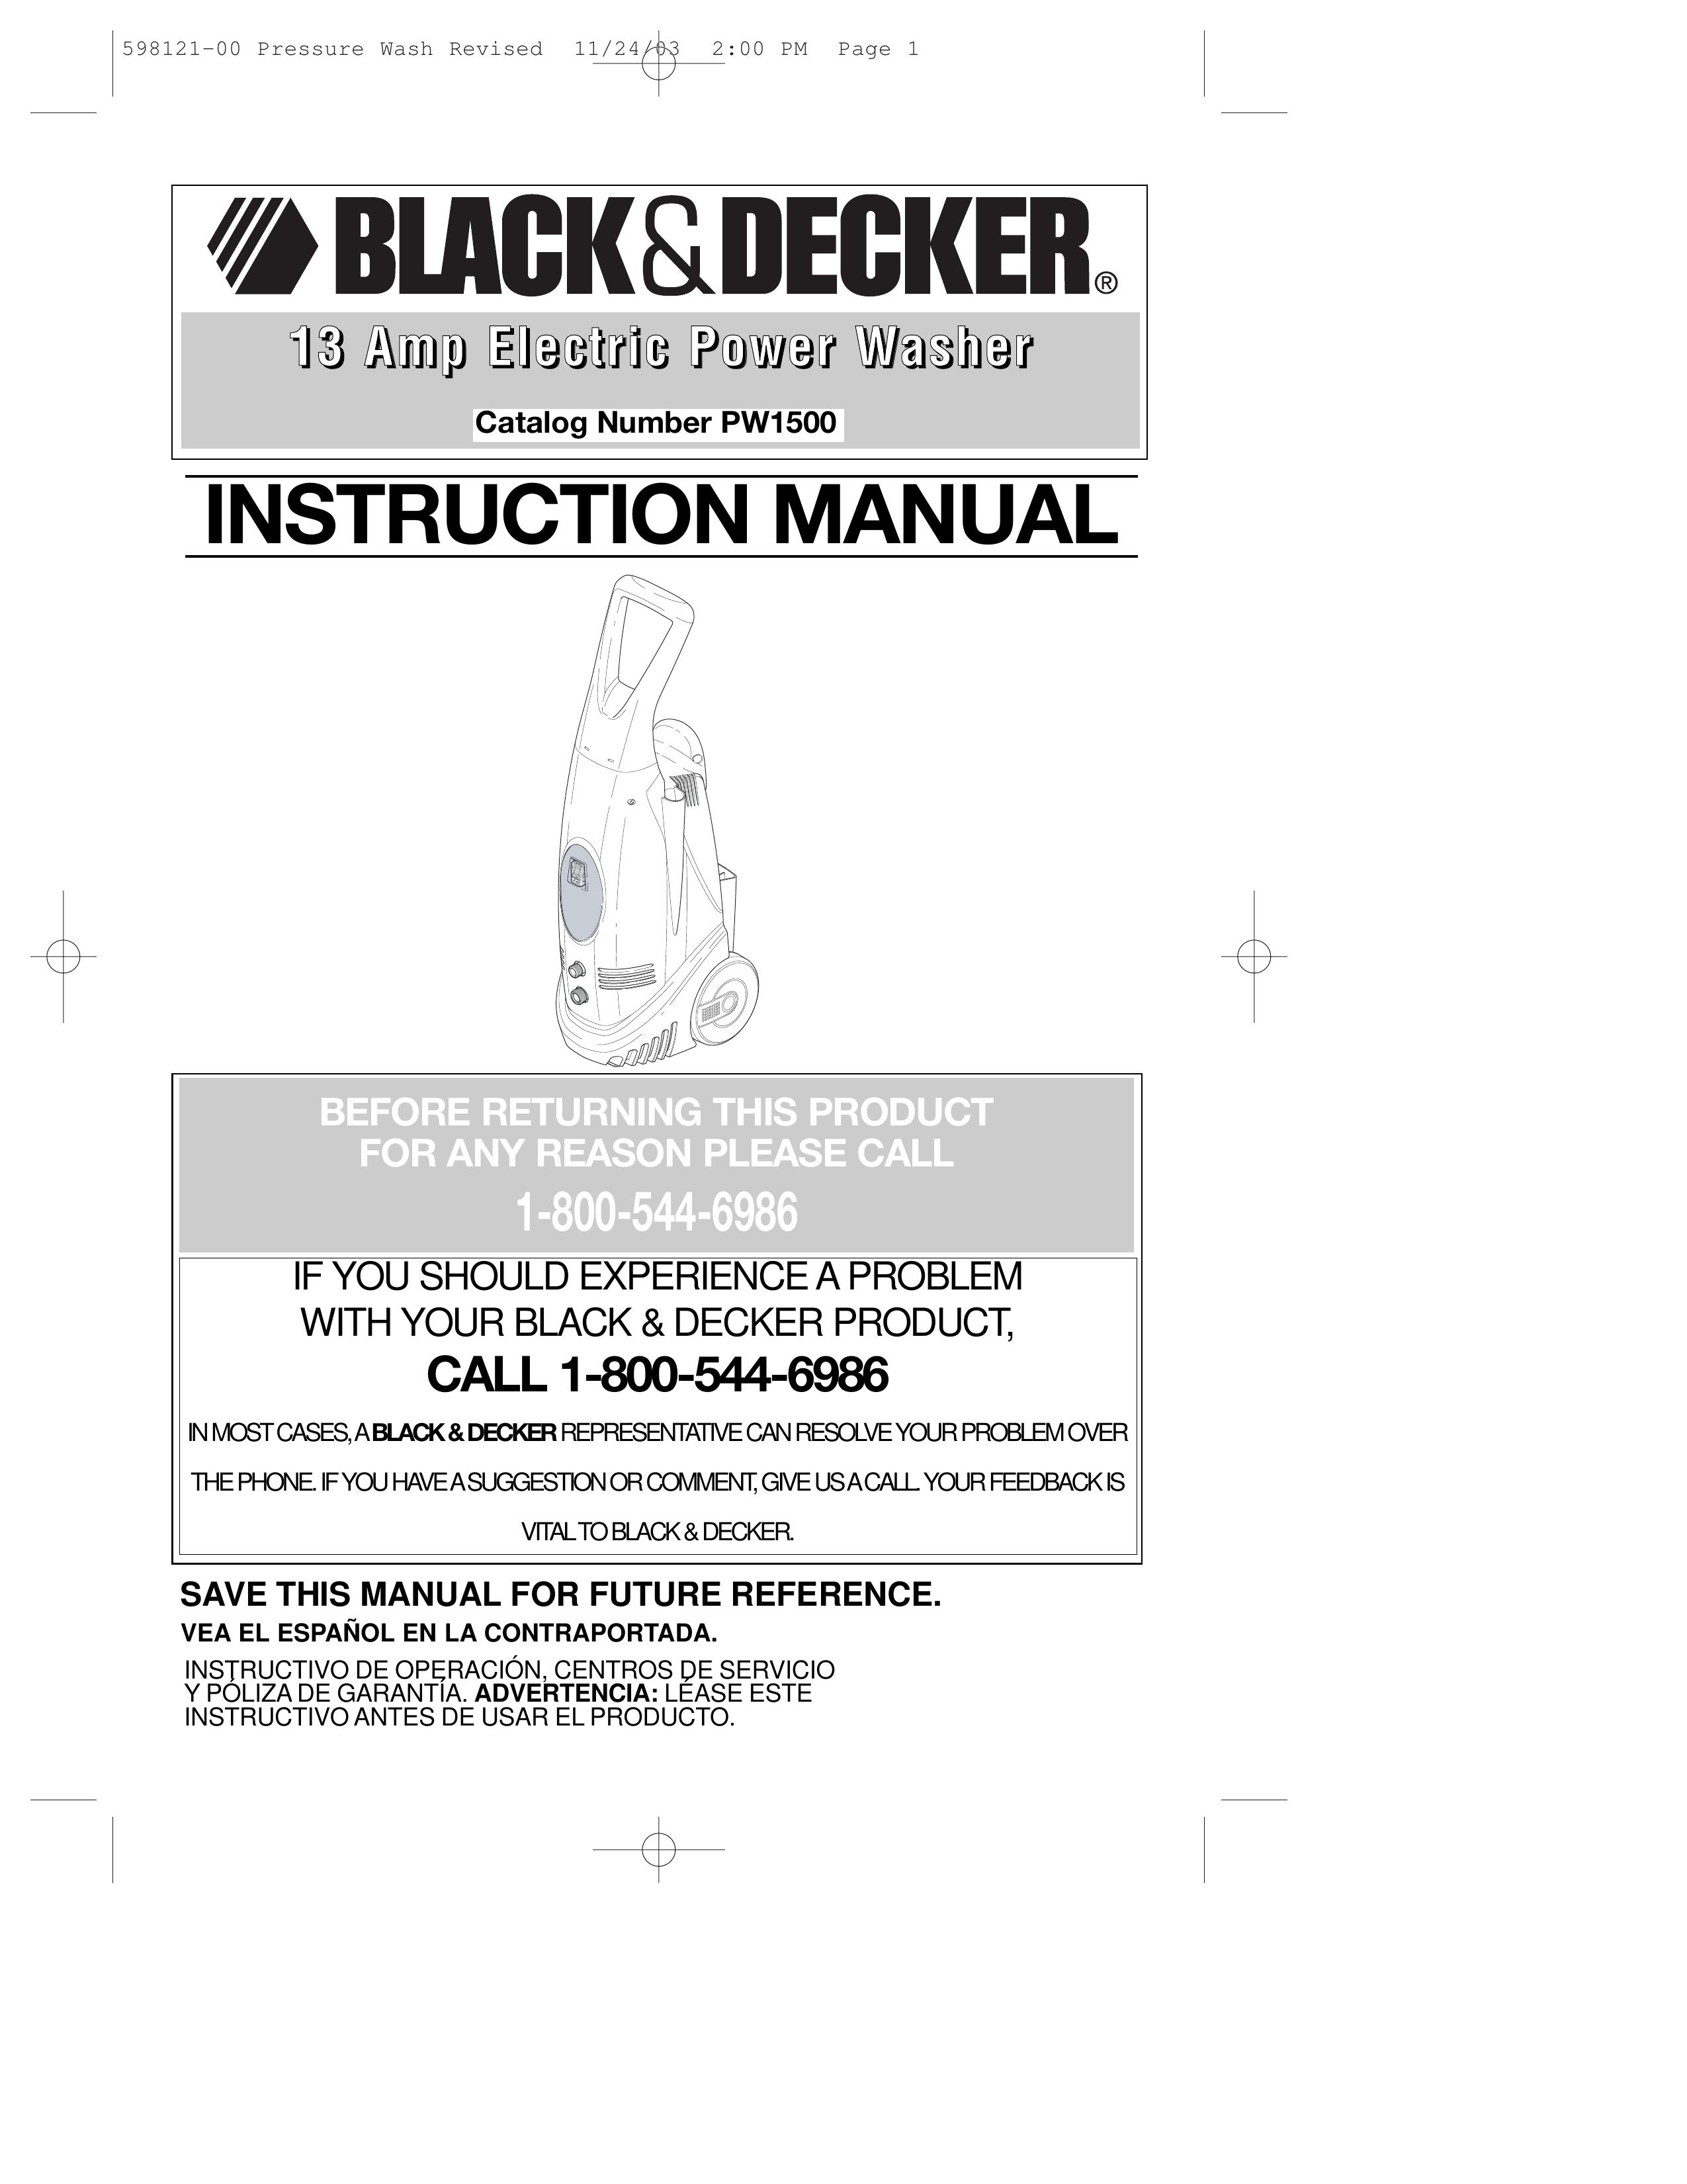 Black & Decker 598121-00 Pressure Washer User Manual